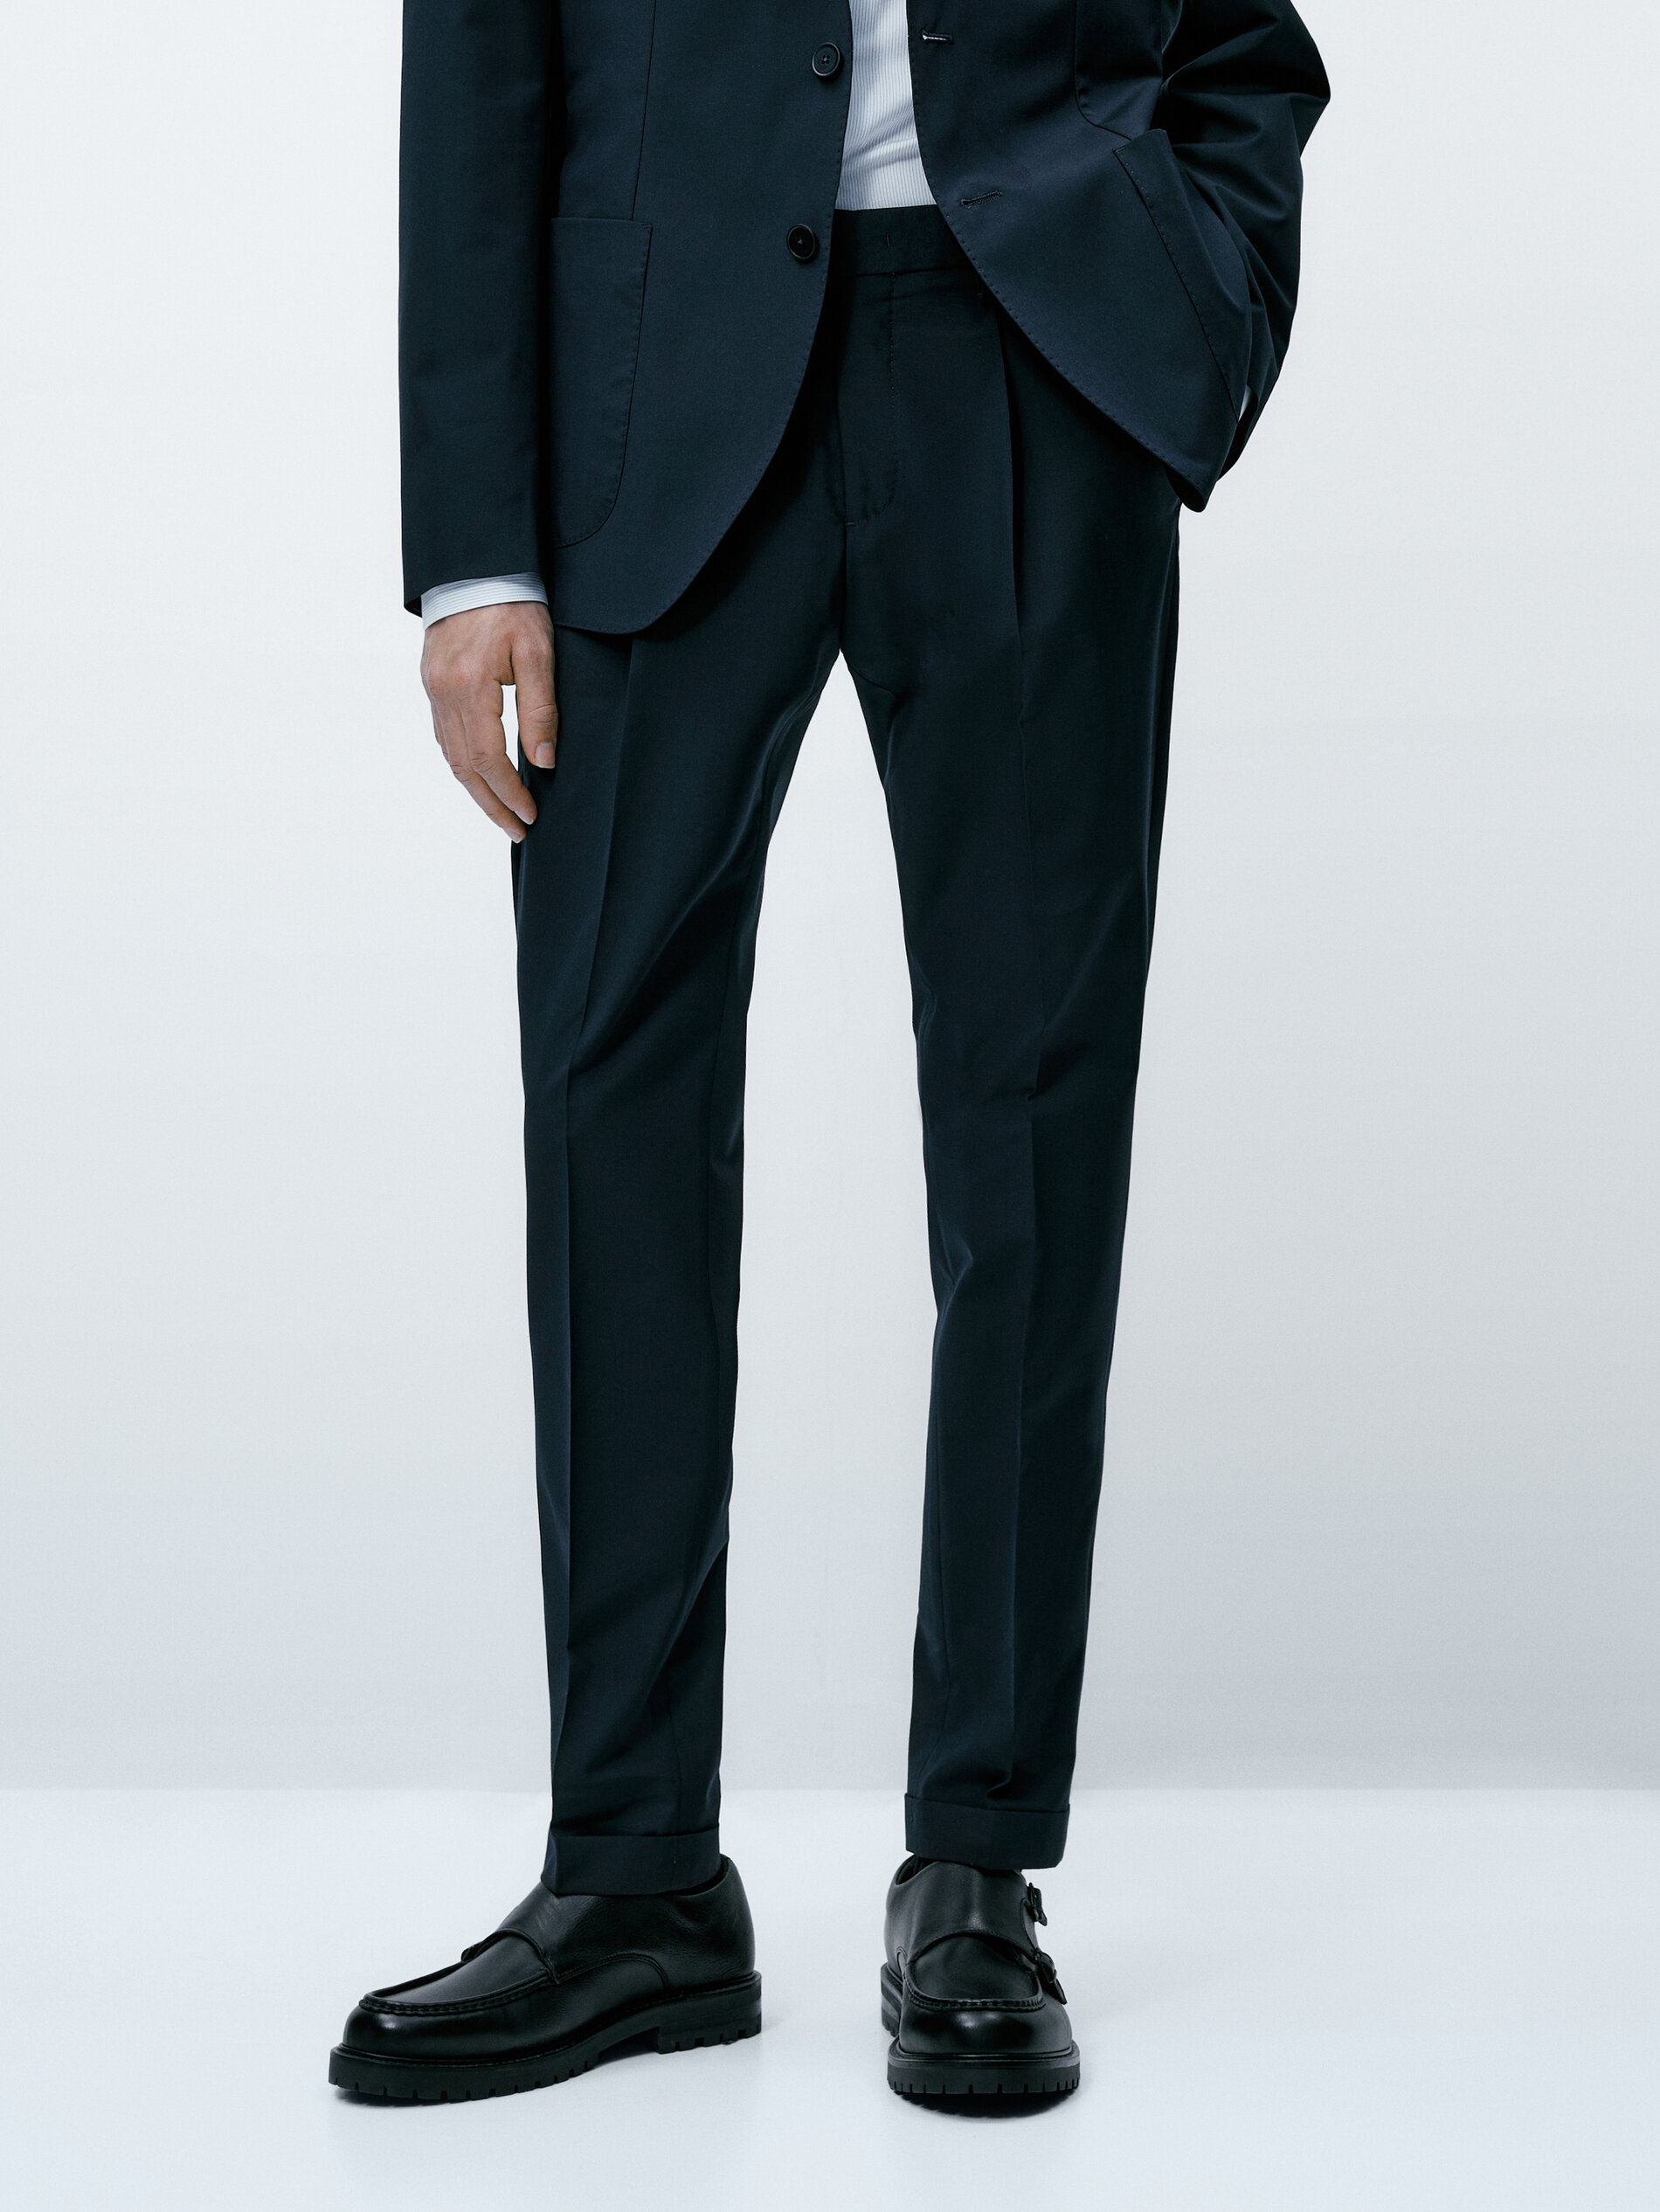 Buy Louis Philippe Black Slim Fit Texture Three Piece Suits for Mens Online   Tata CLiQ